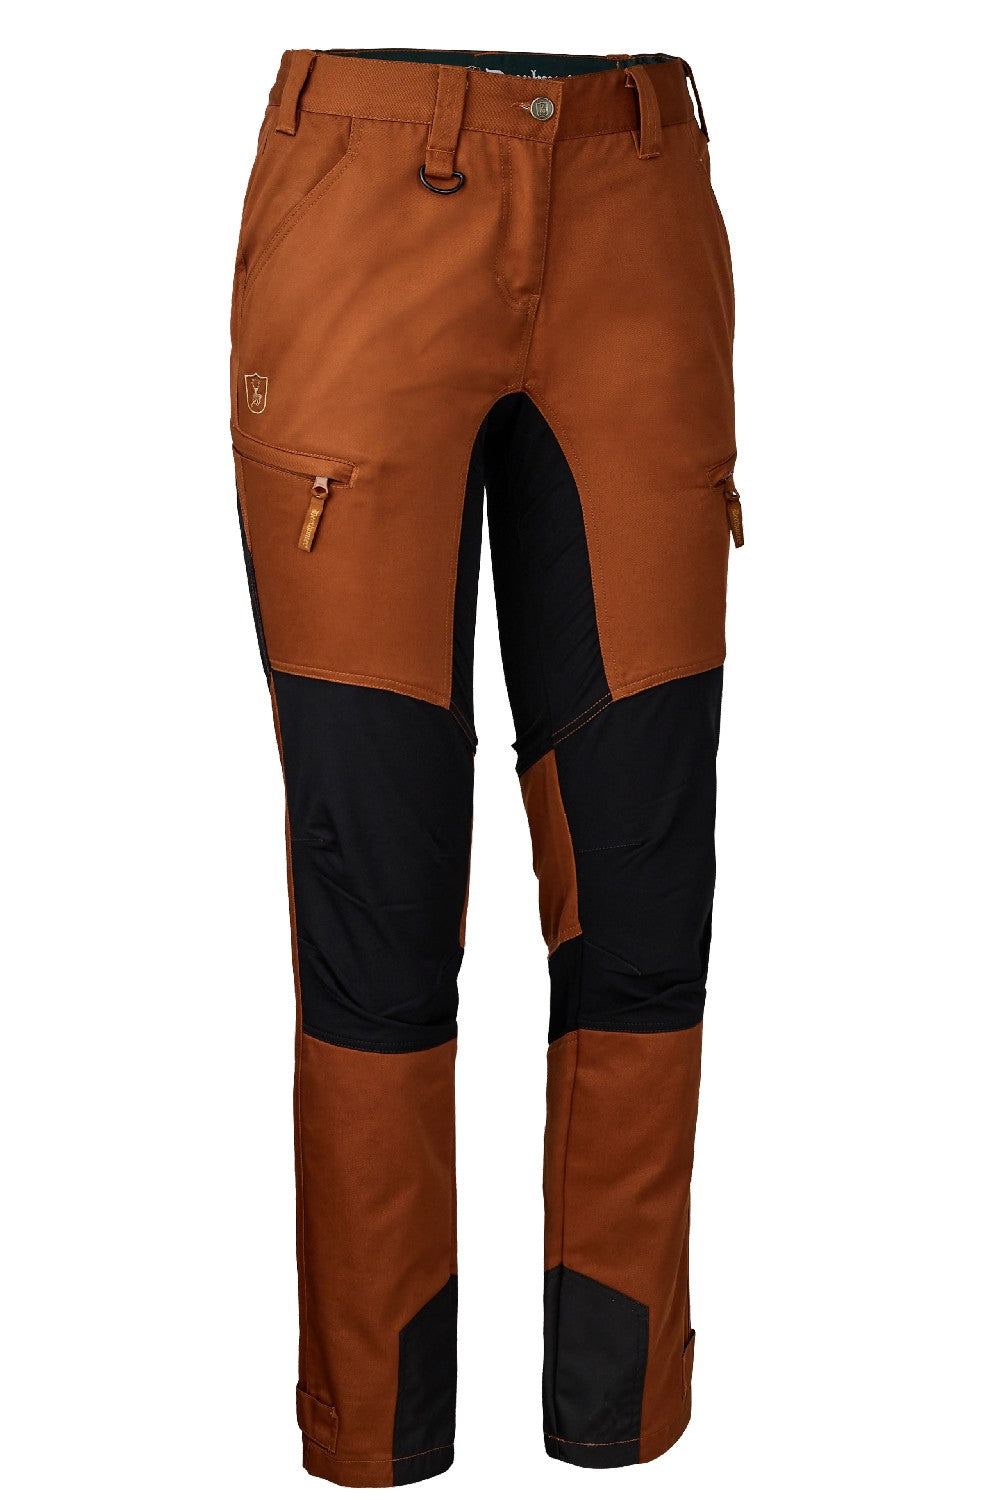 Deerhunter Lady Roja Trousers in Burnt Orange 